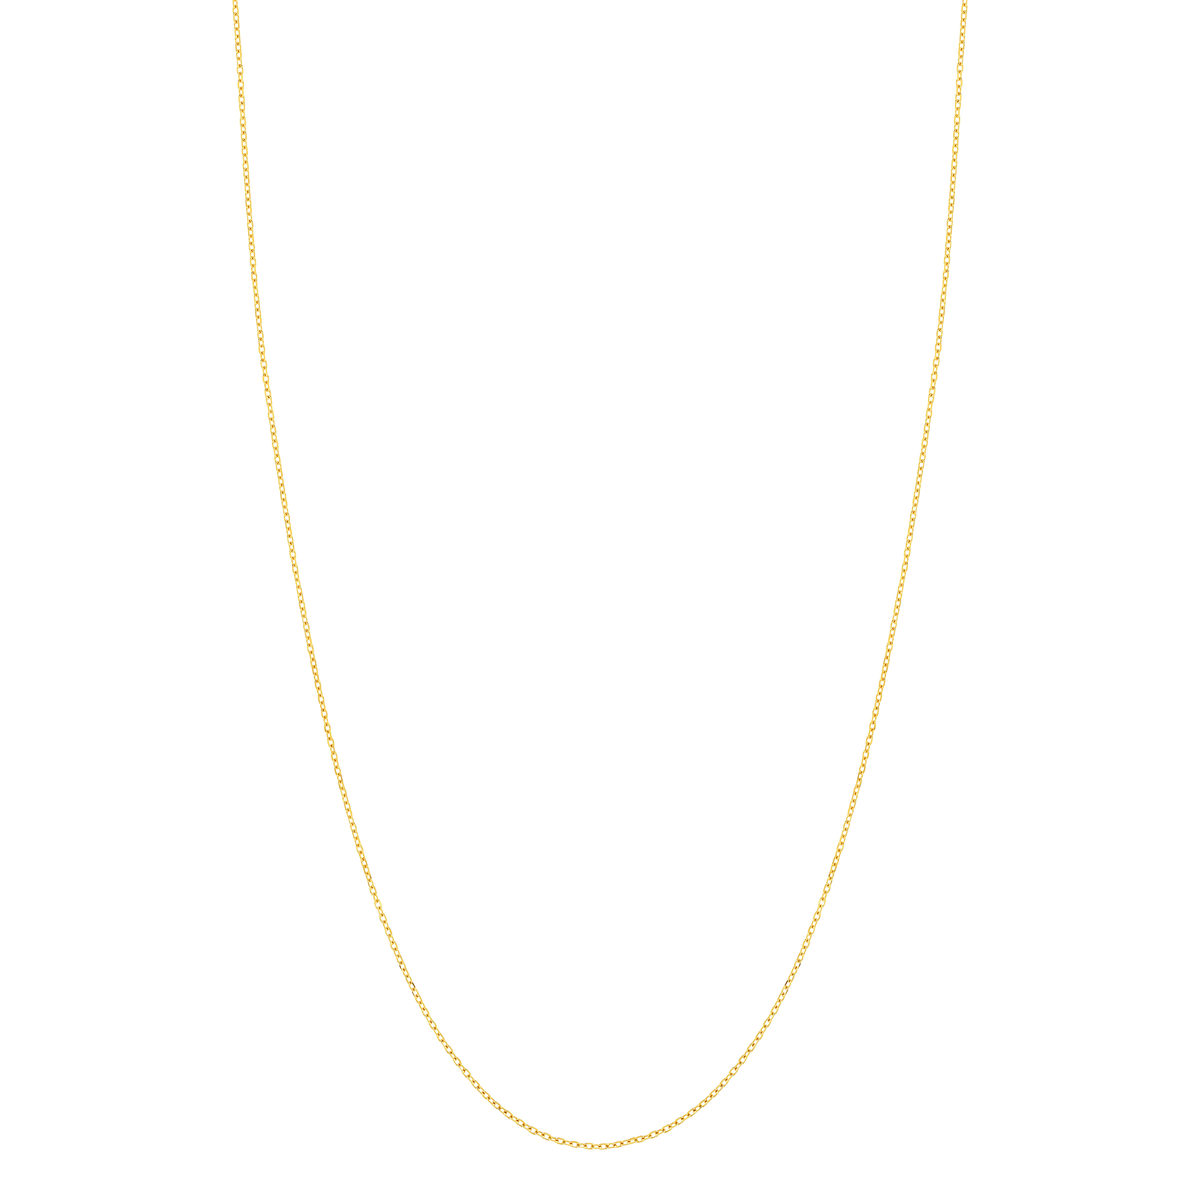 Chaine or 750 jaune, maille forçat, 40 cm - vue 2